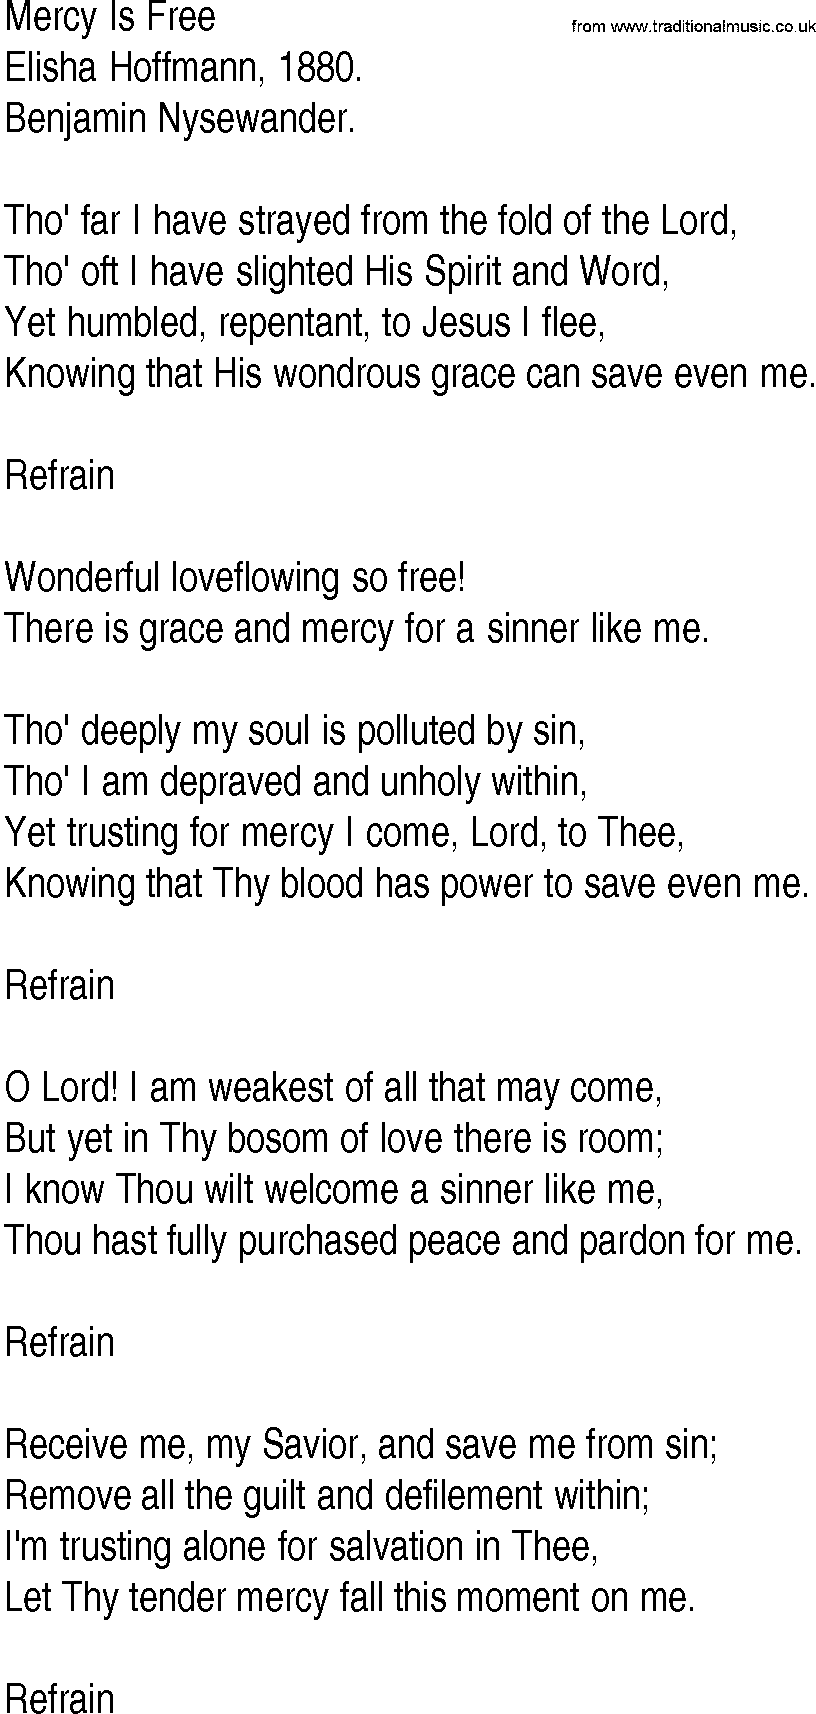 Hymn and Gospel Song: Mercy Is Free by Elisha Hoffmann lyrics